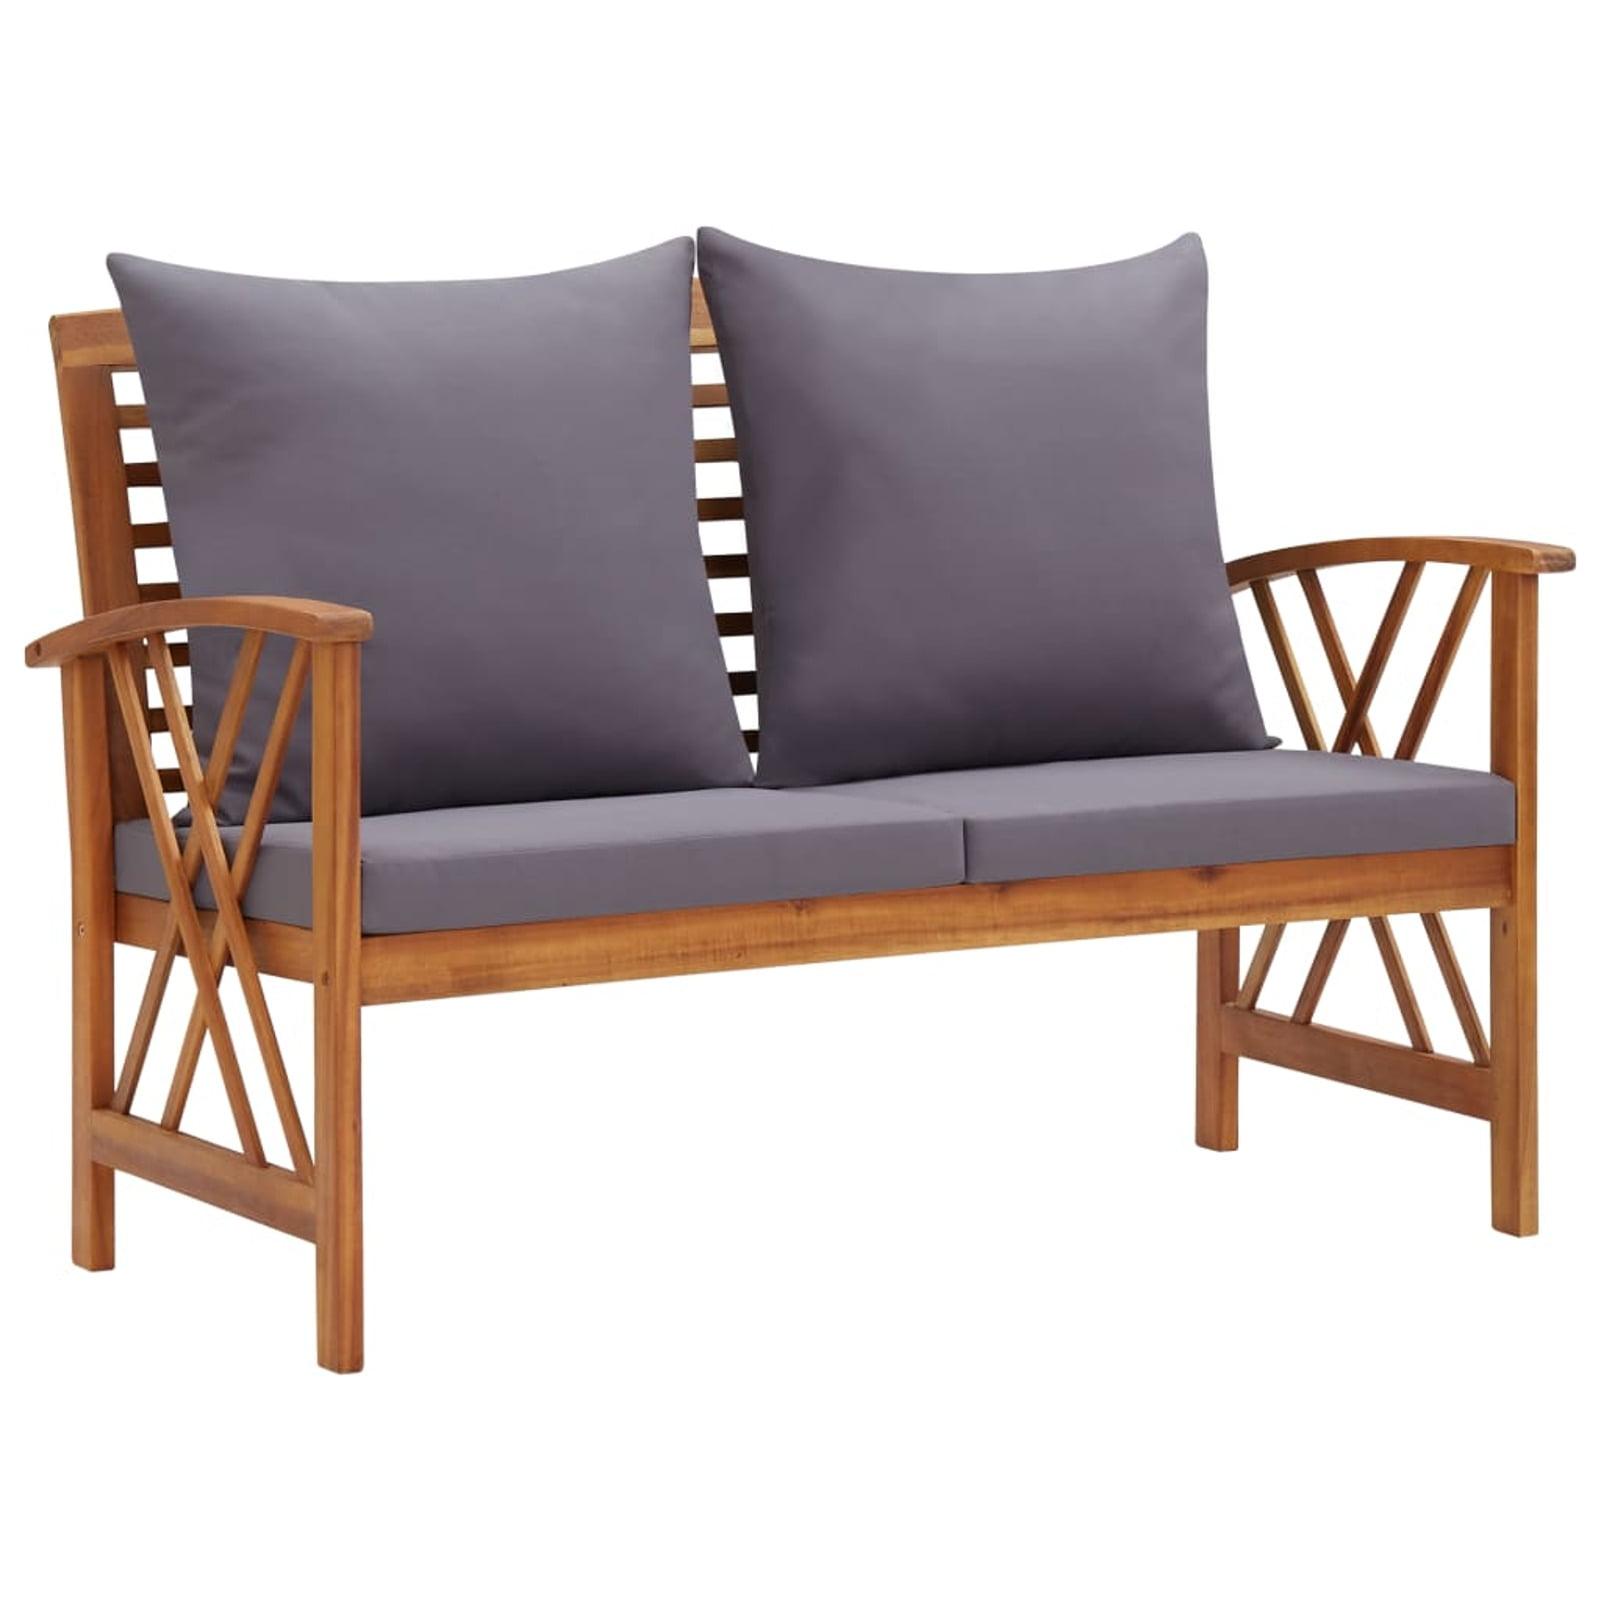 Solid Acacia Wood Garden Bench with Dark Gray Cushions 46.9"